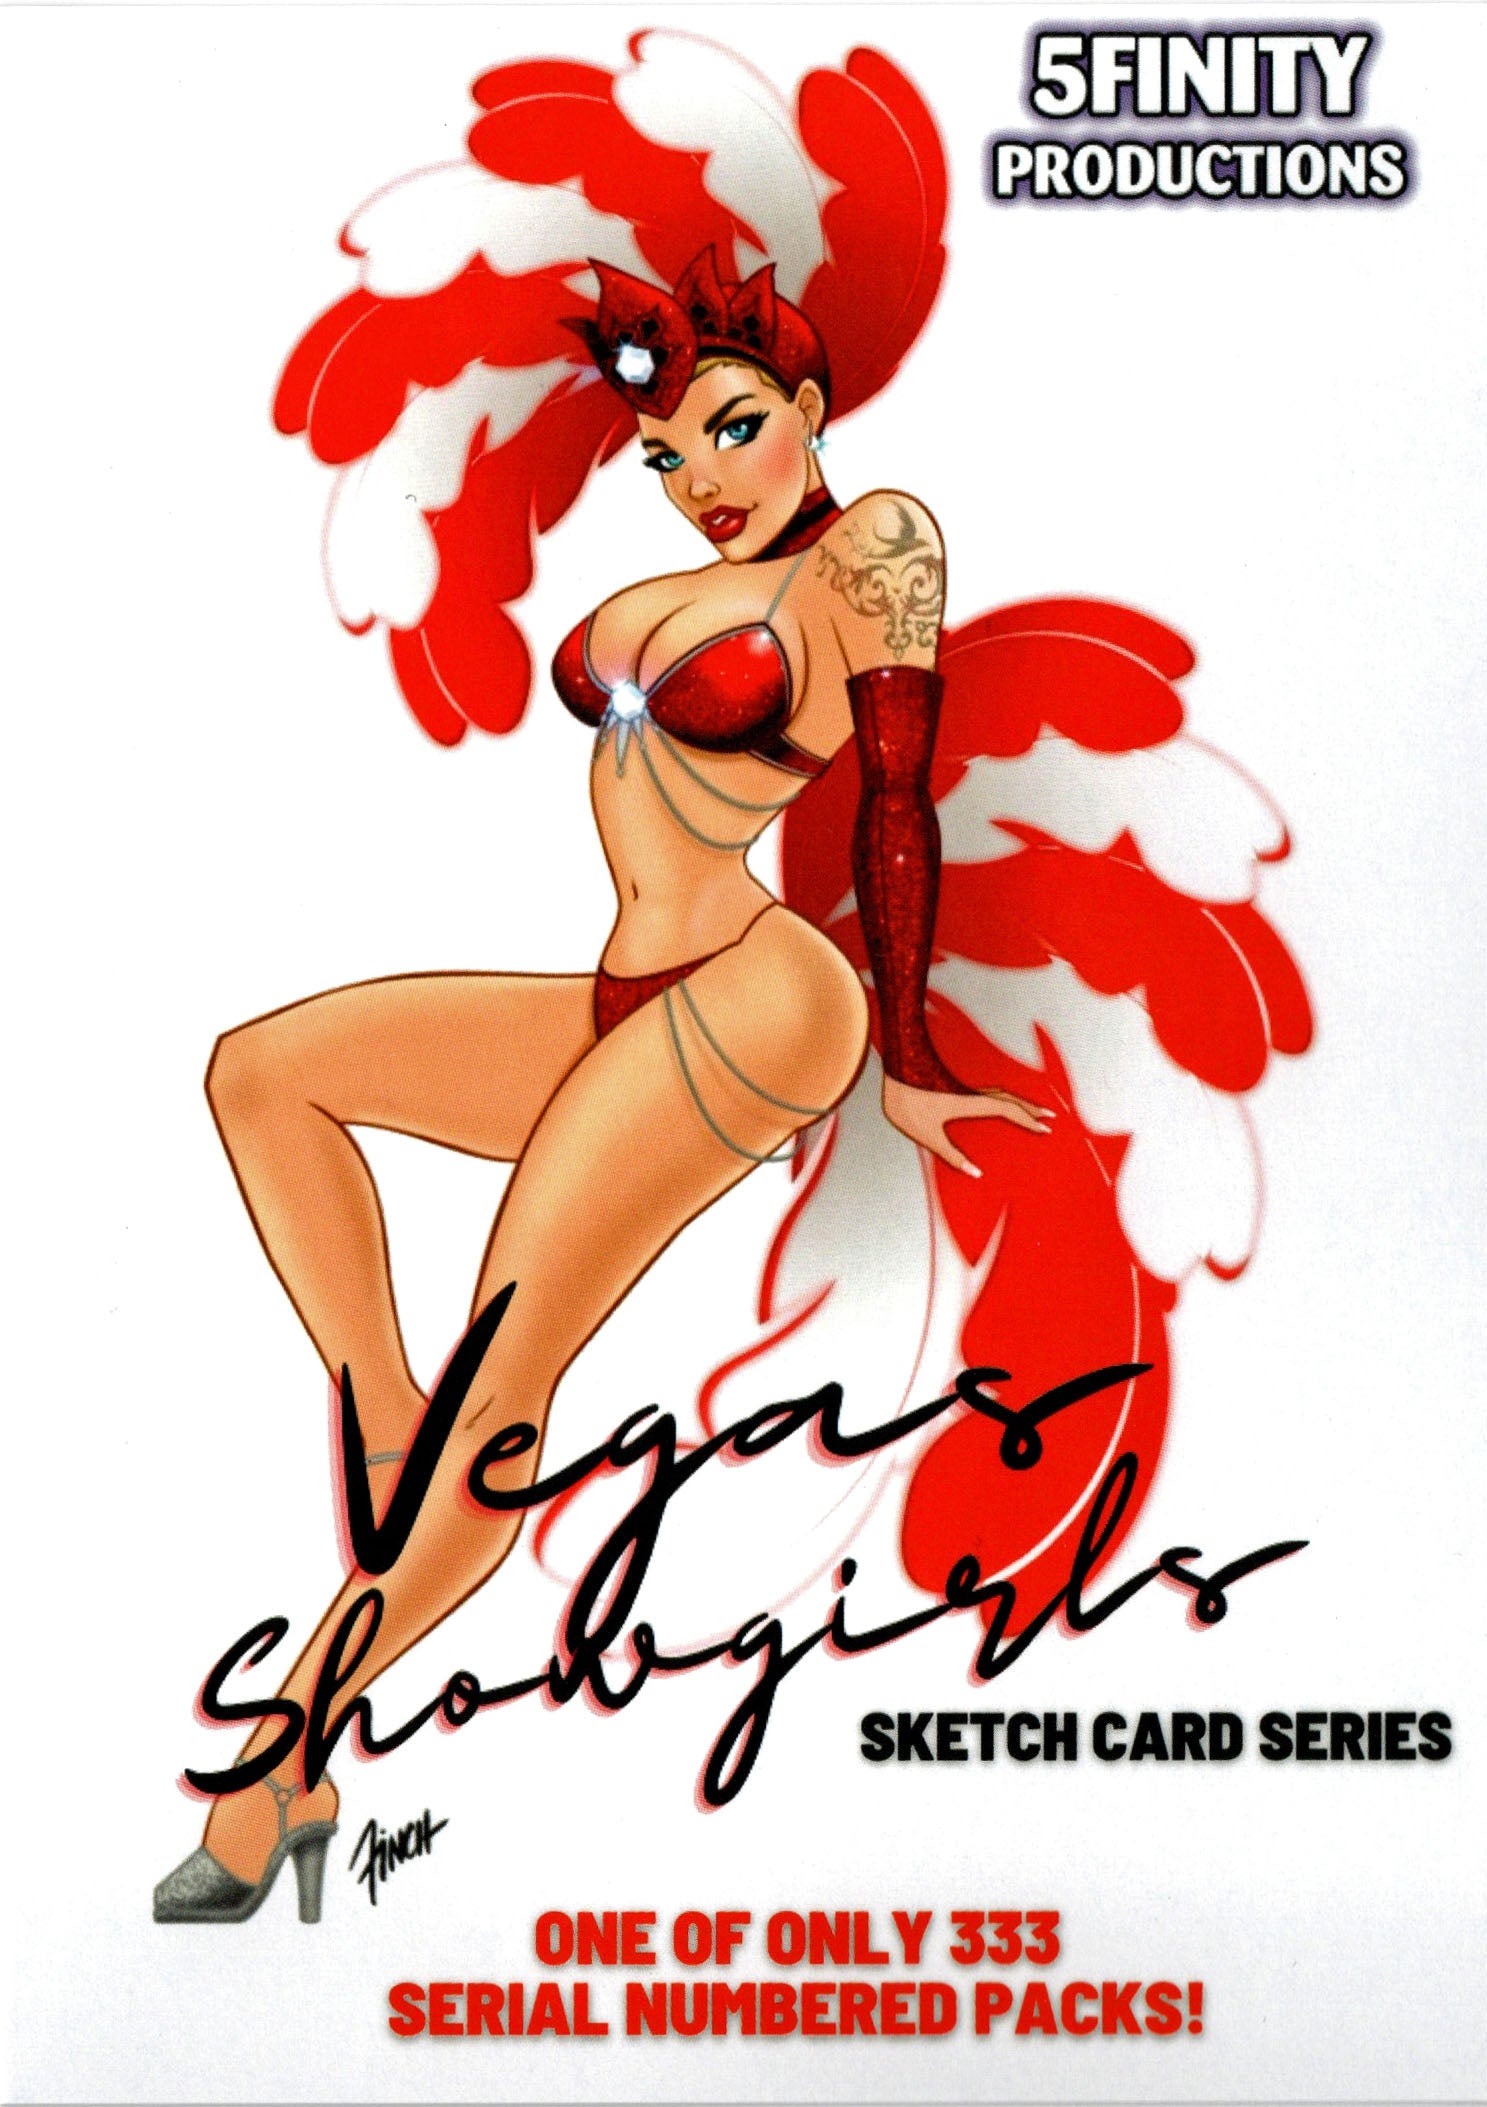 2022 5finity Vegas Showgirls Sketch Card Pack